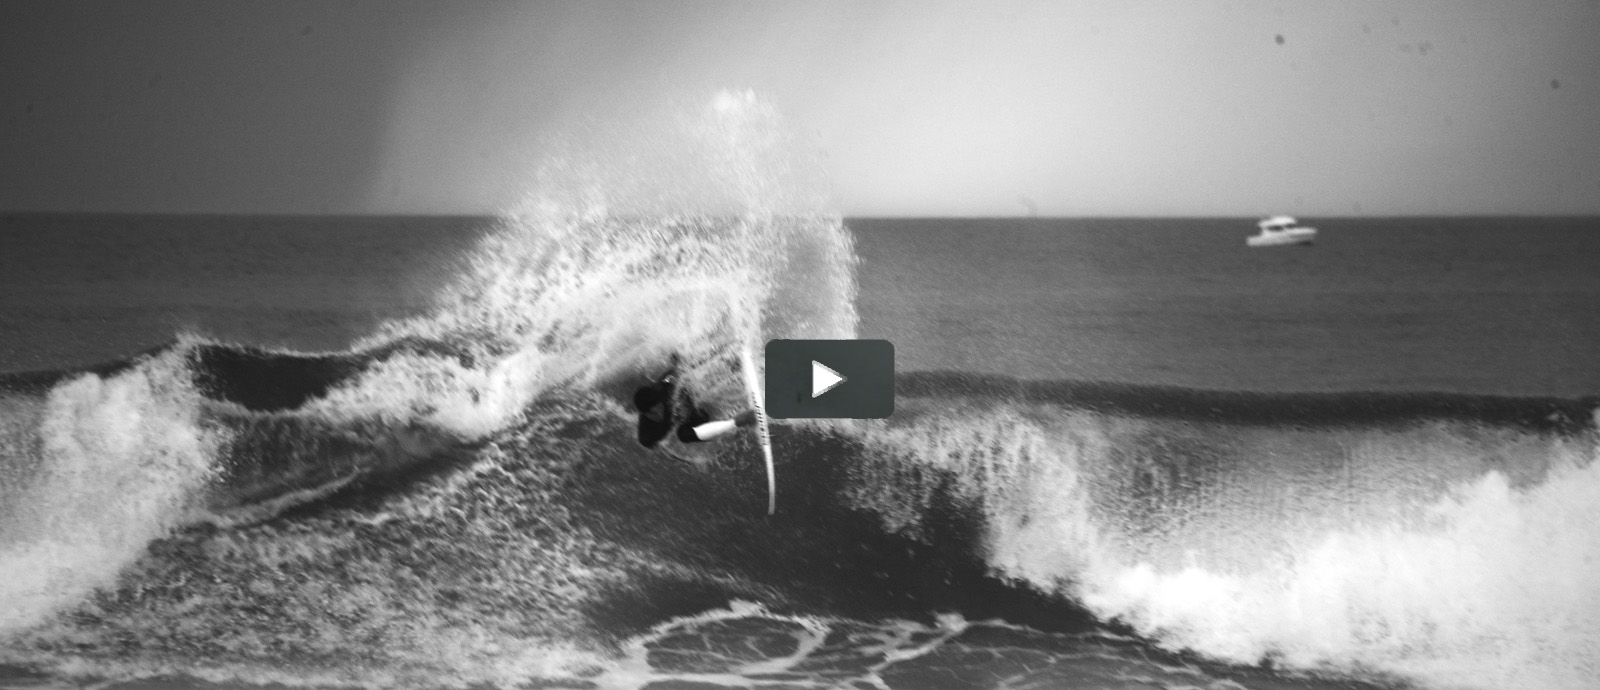 Pukas Surf Quik Pro France 2013 Gabriel Medina 2nd Video Cover